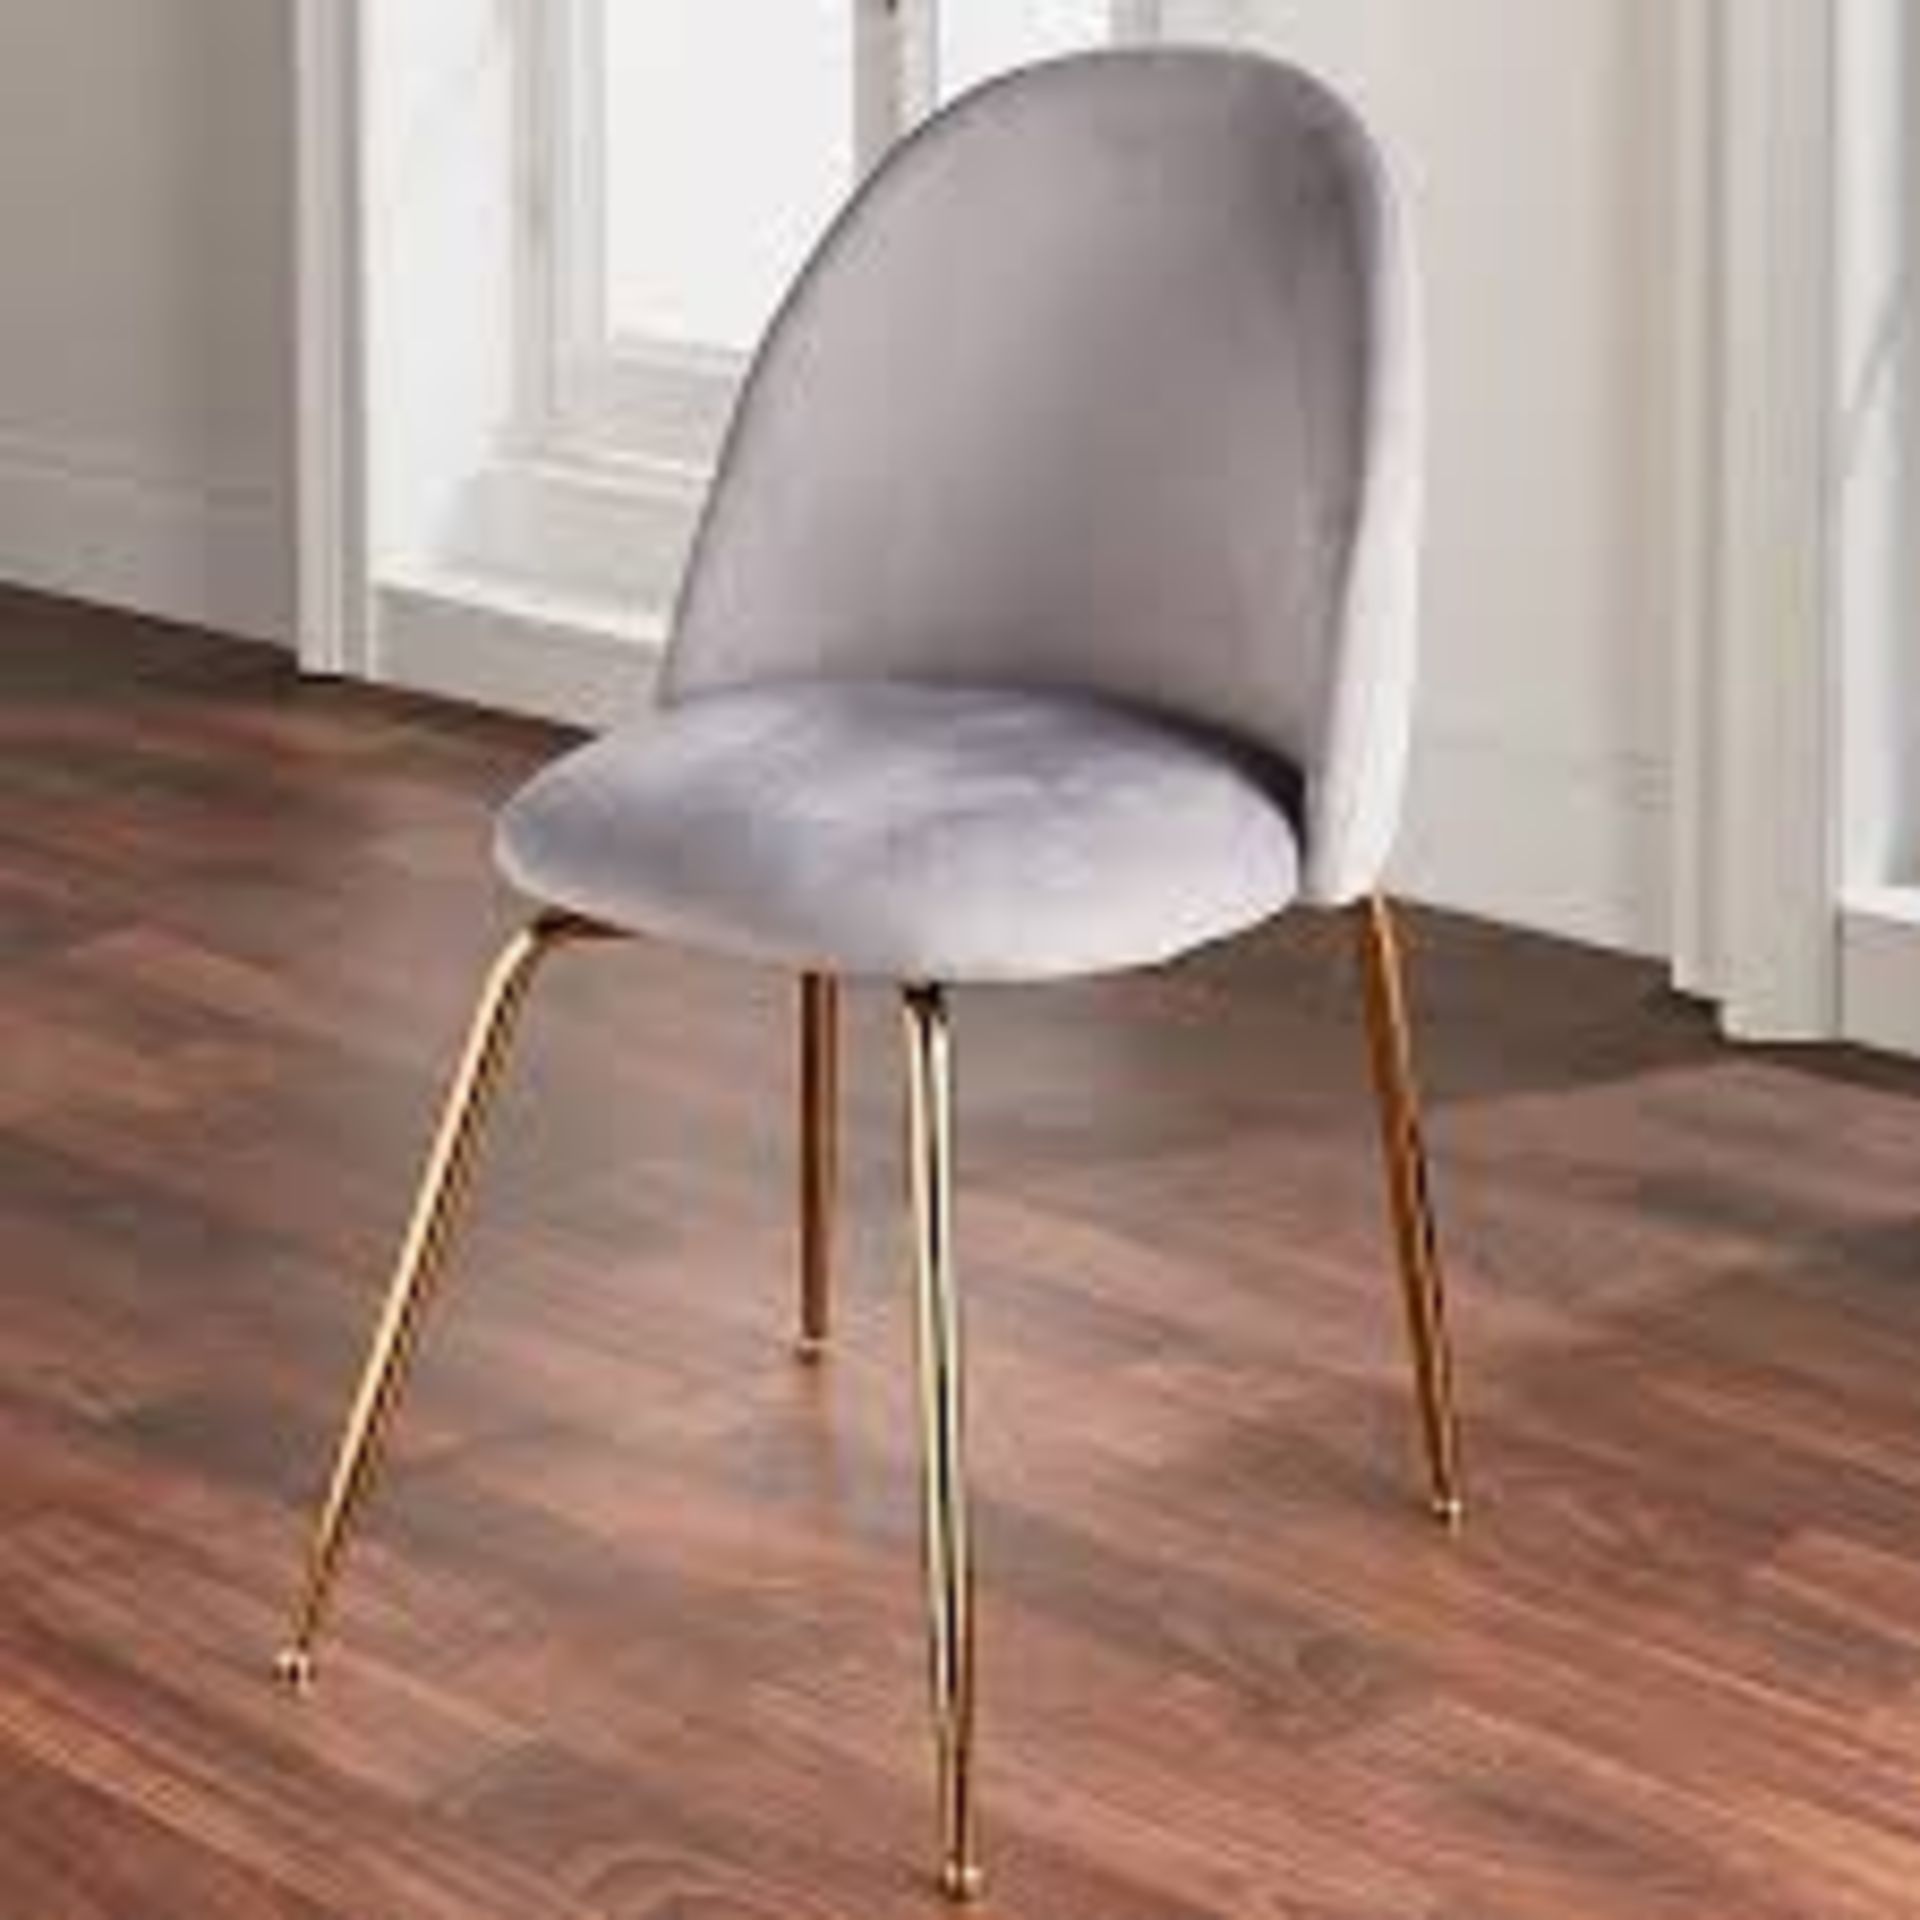 Brand New Velvet Dining Chairs - Gold Legs (set of 2) rrp £480 per set